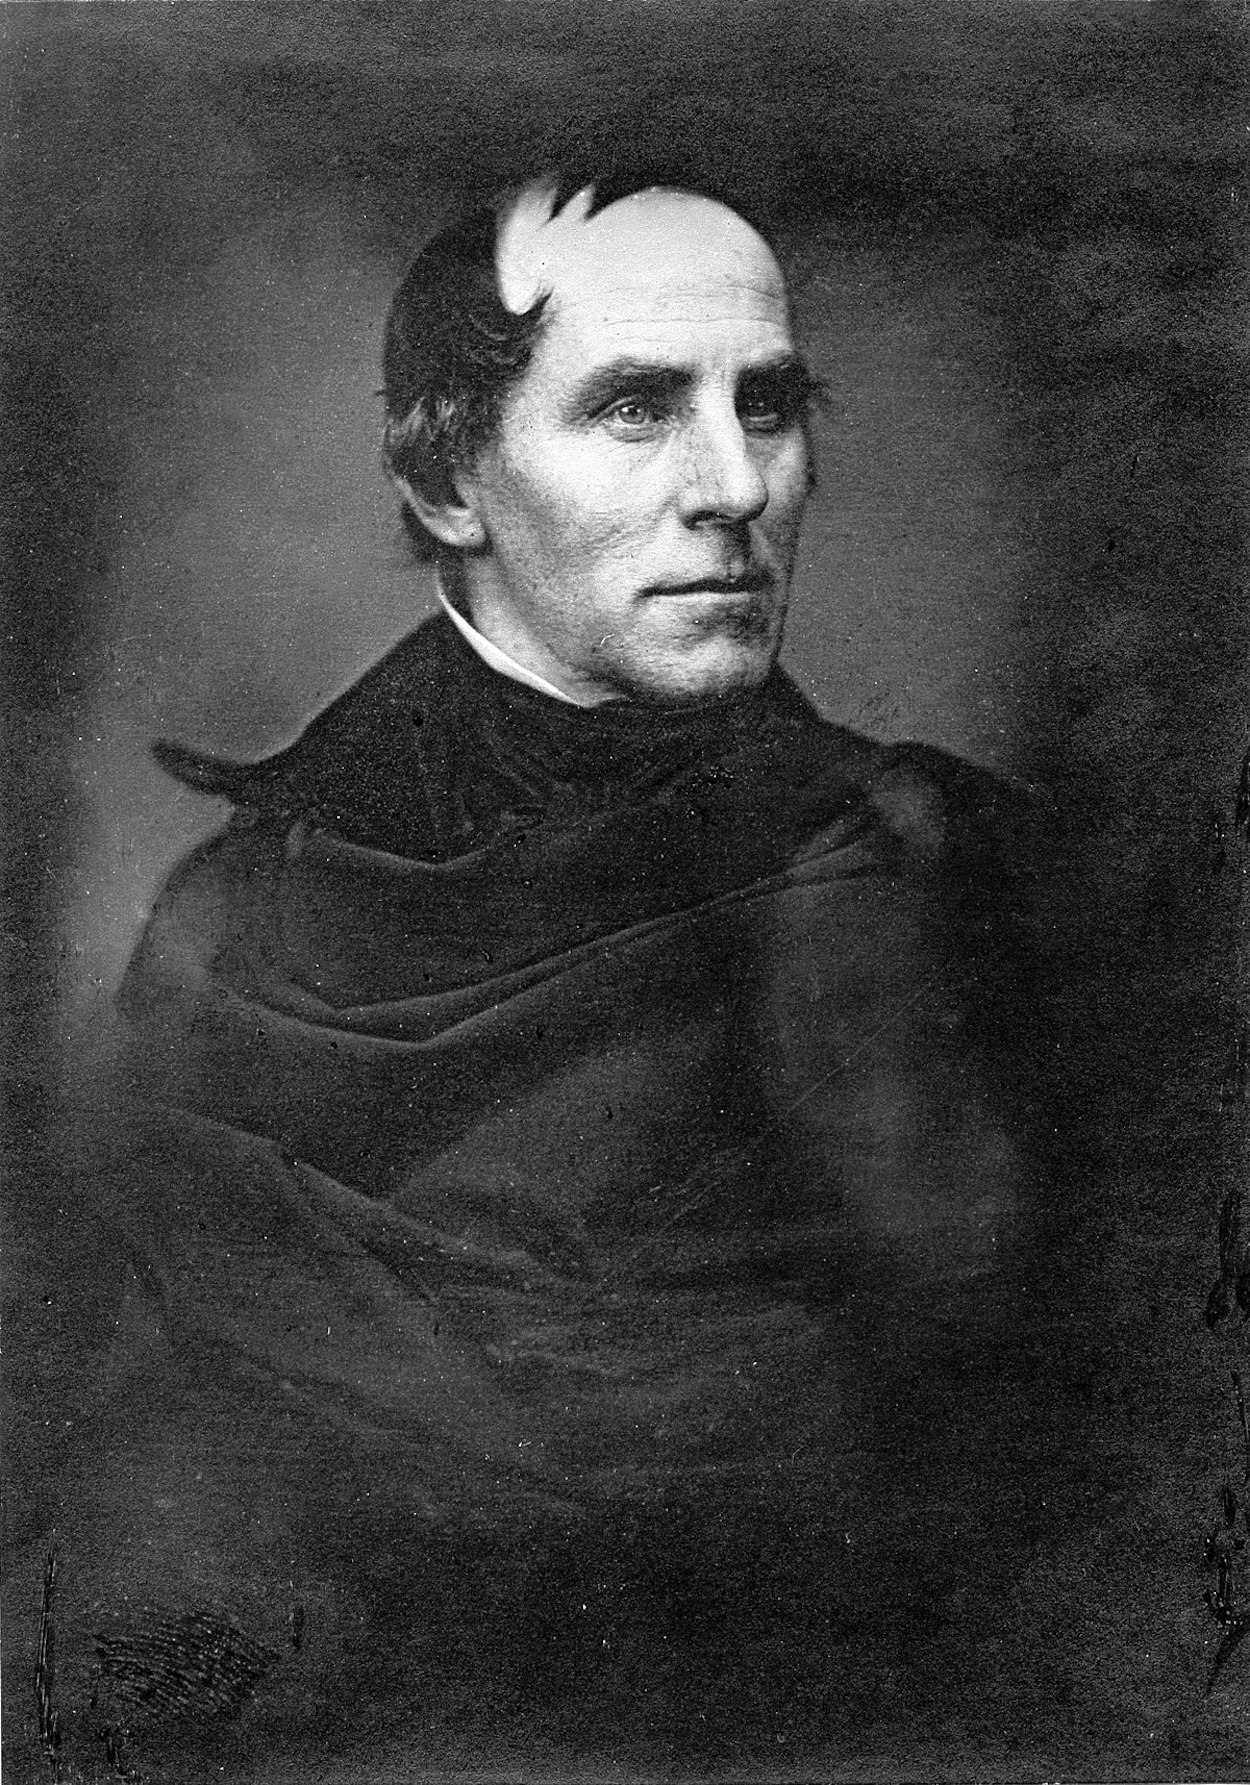 Томас Коул - 1 февраля 1801 - 11 февраля 1848